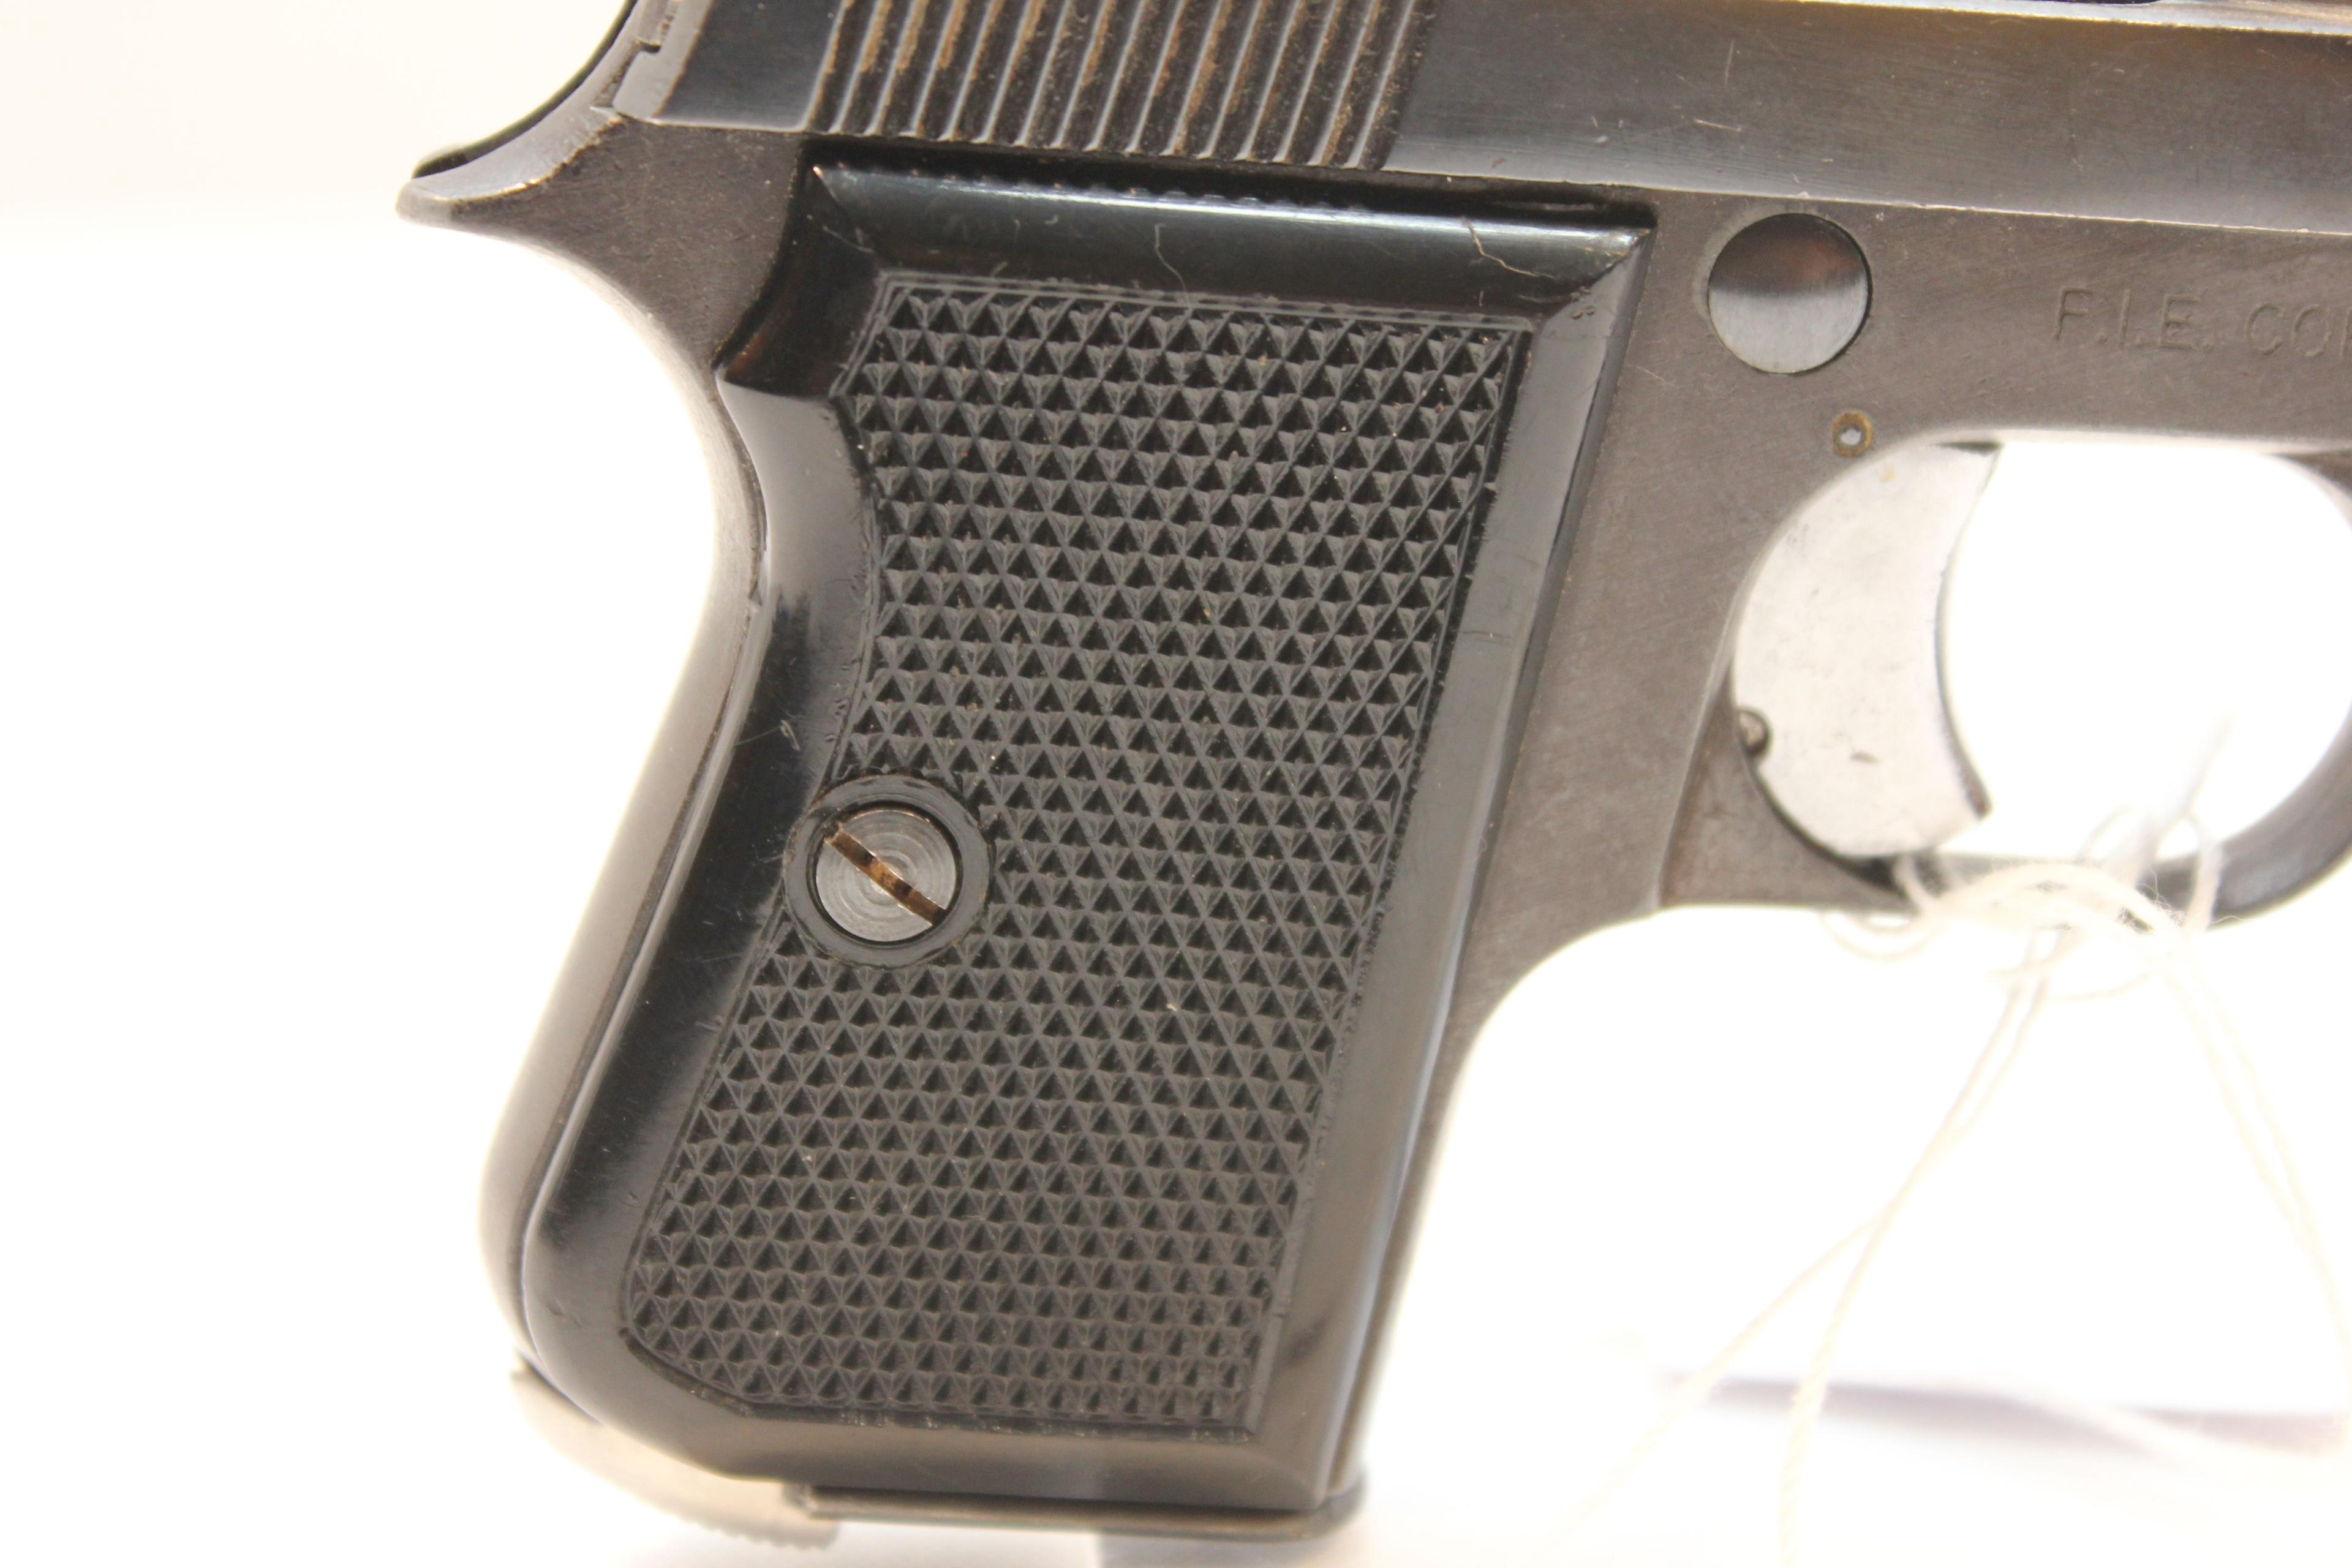 F.I.E. Corp. Titan .25 Auto Cal. Semi-Automatic Single Action Pistol; SN A86556